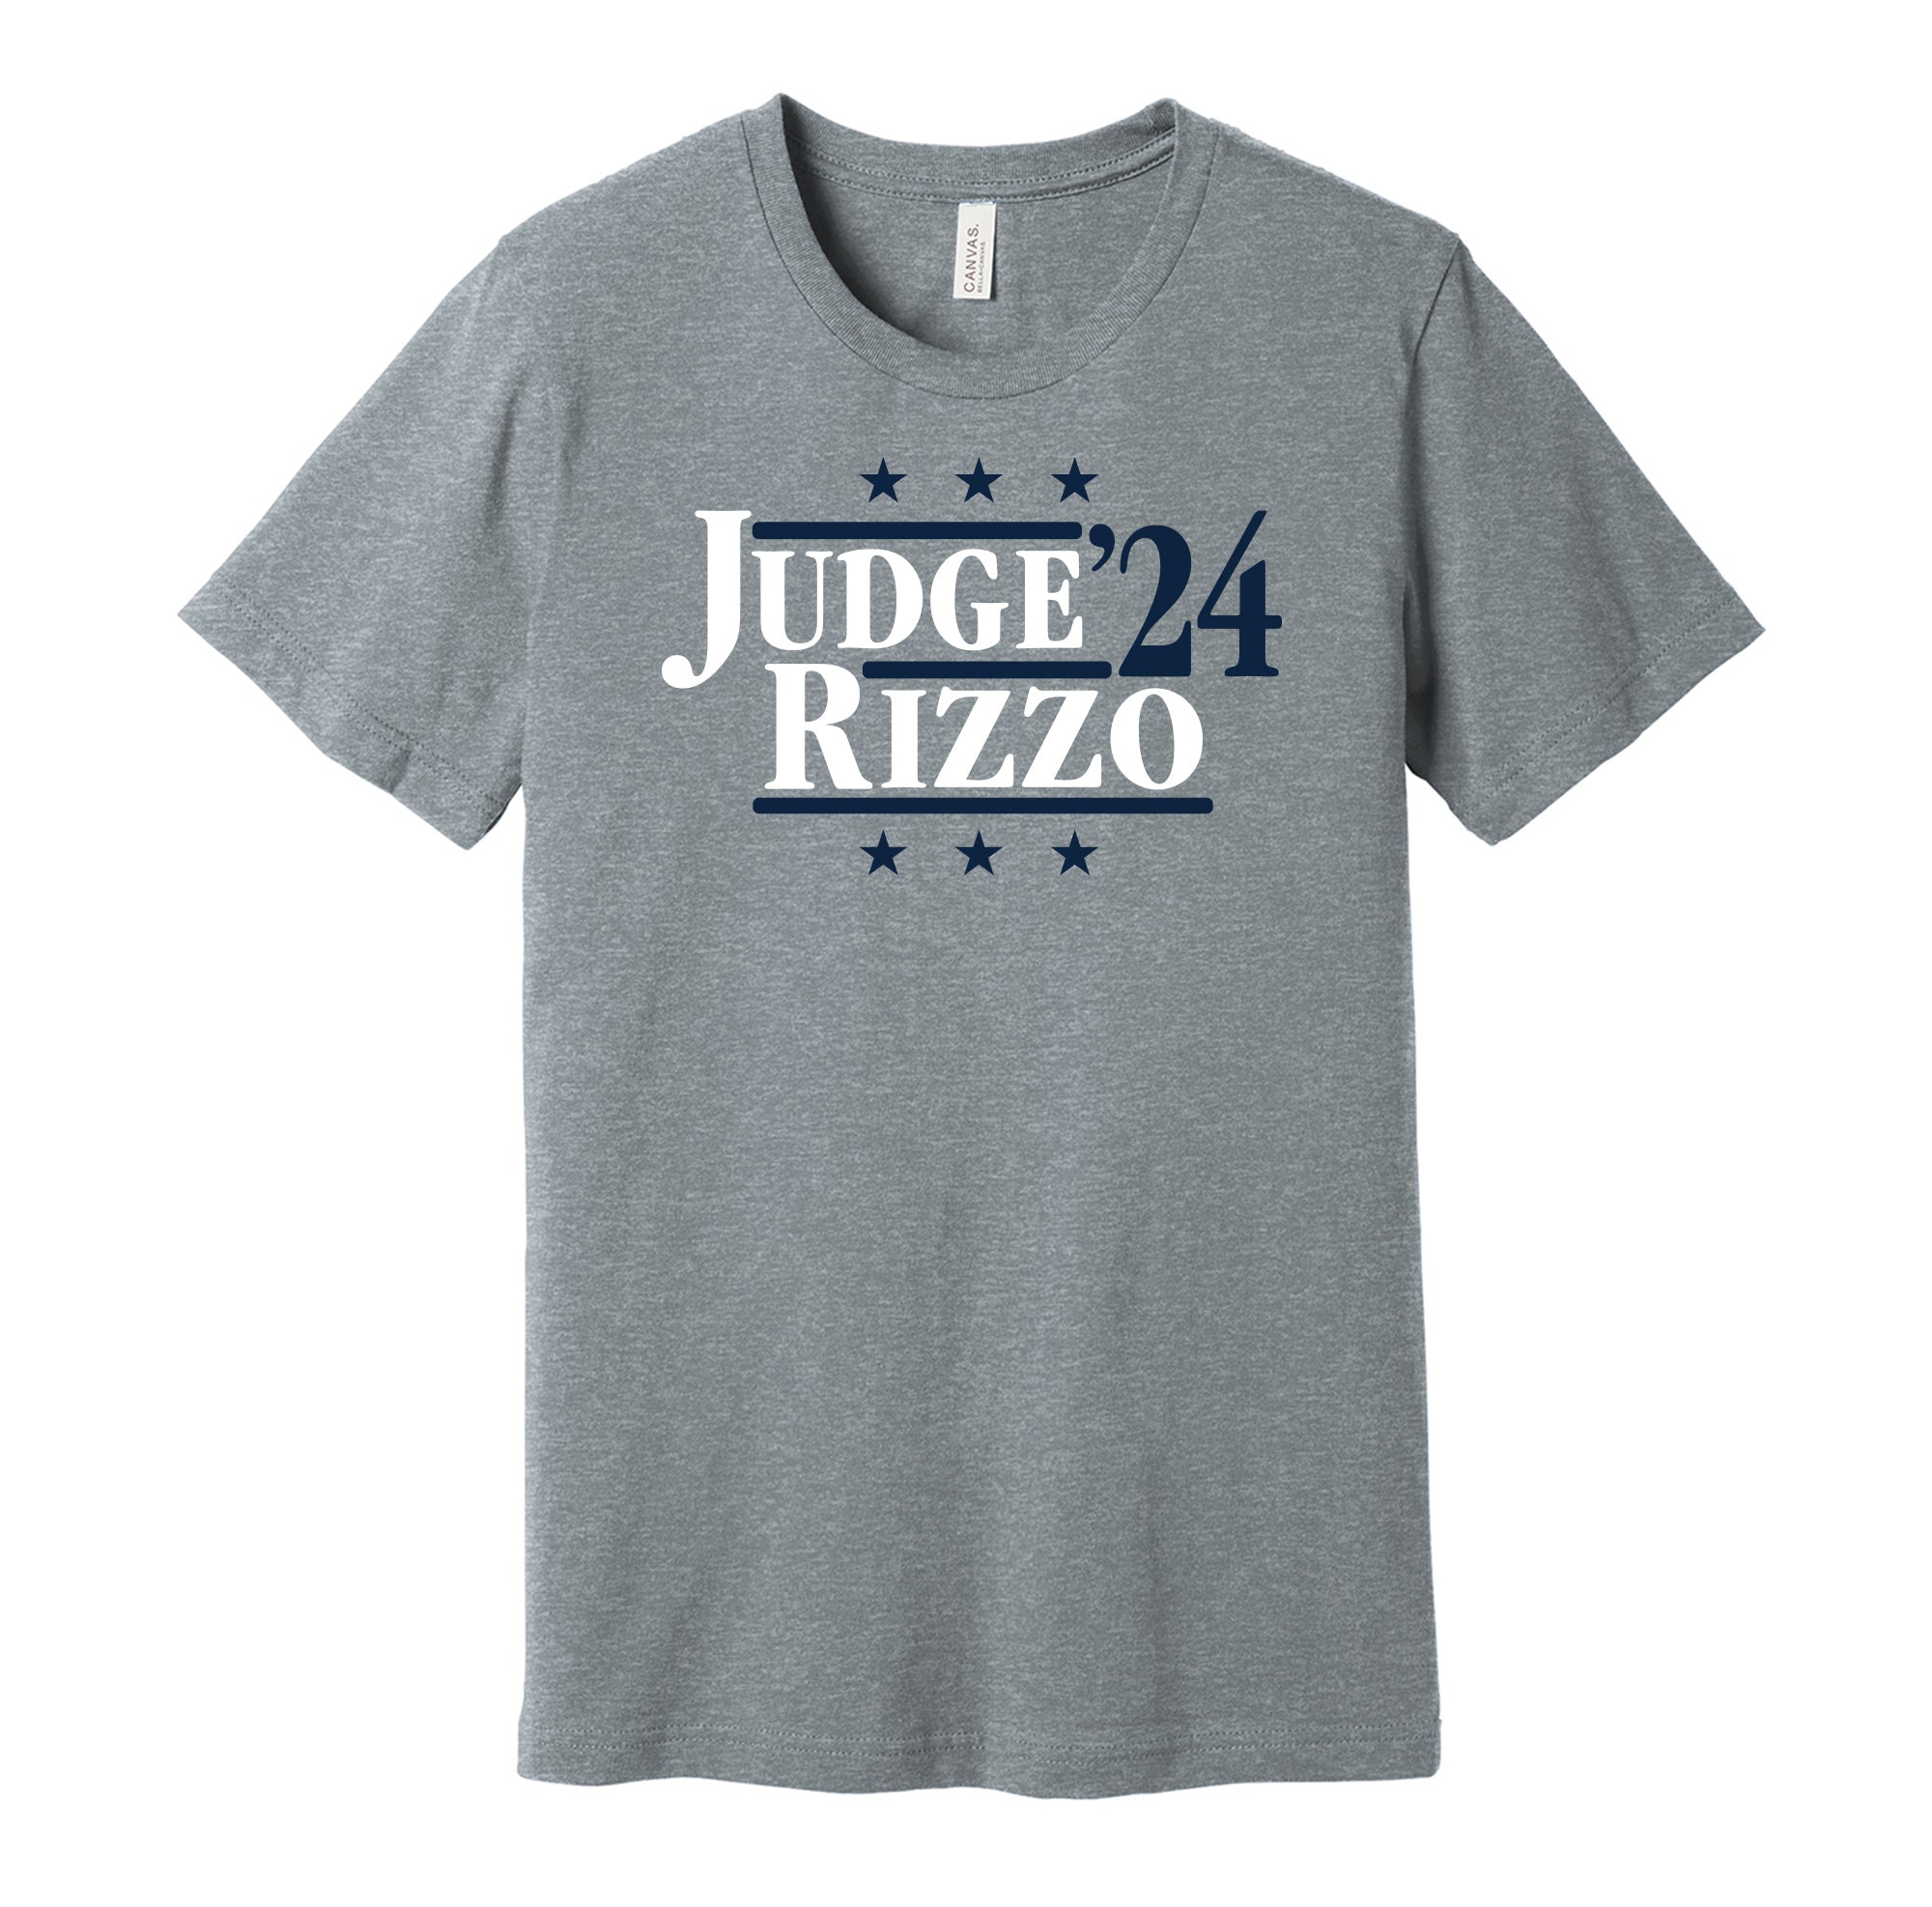 Judge & Rizzo '24 - New York Baseball Political Campaign Parody T-Shirt - Hyper Than Hype Shirts M / Grey Shirt